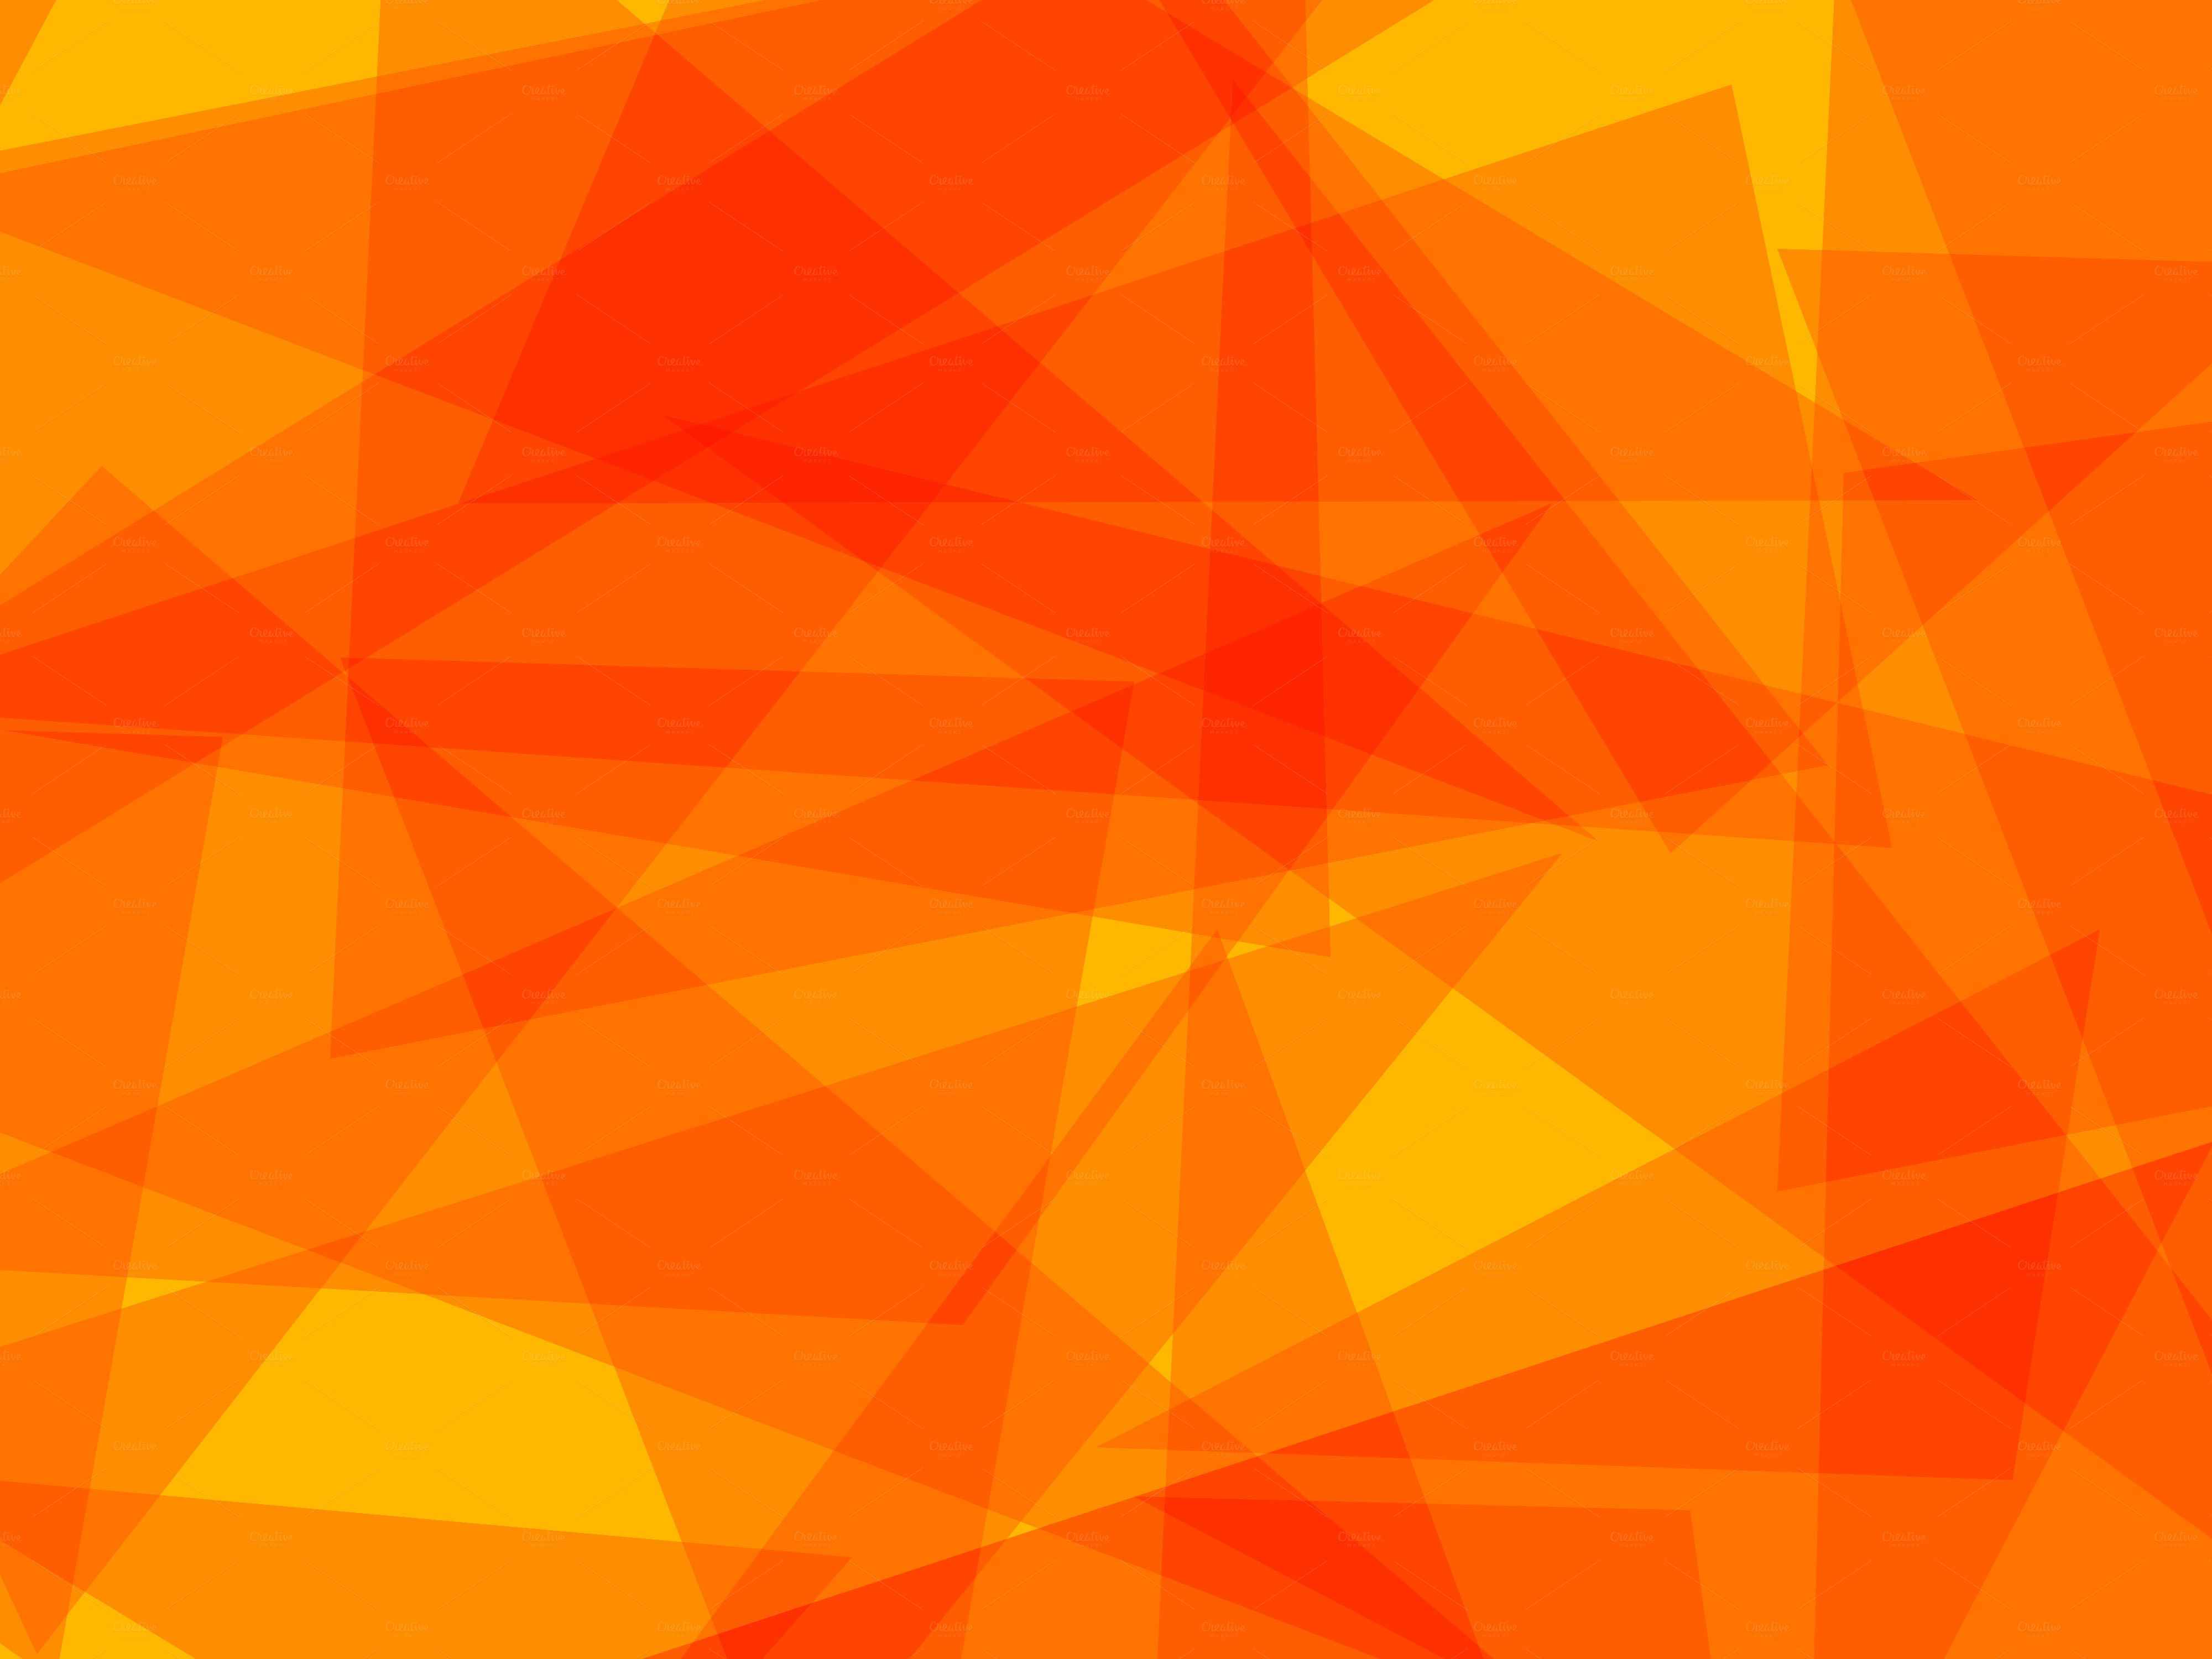 Orange Wallpapers 1080p # 8Y198S2 - 4USkY